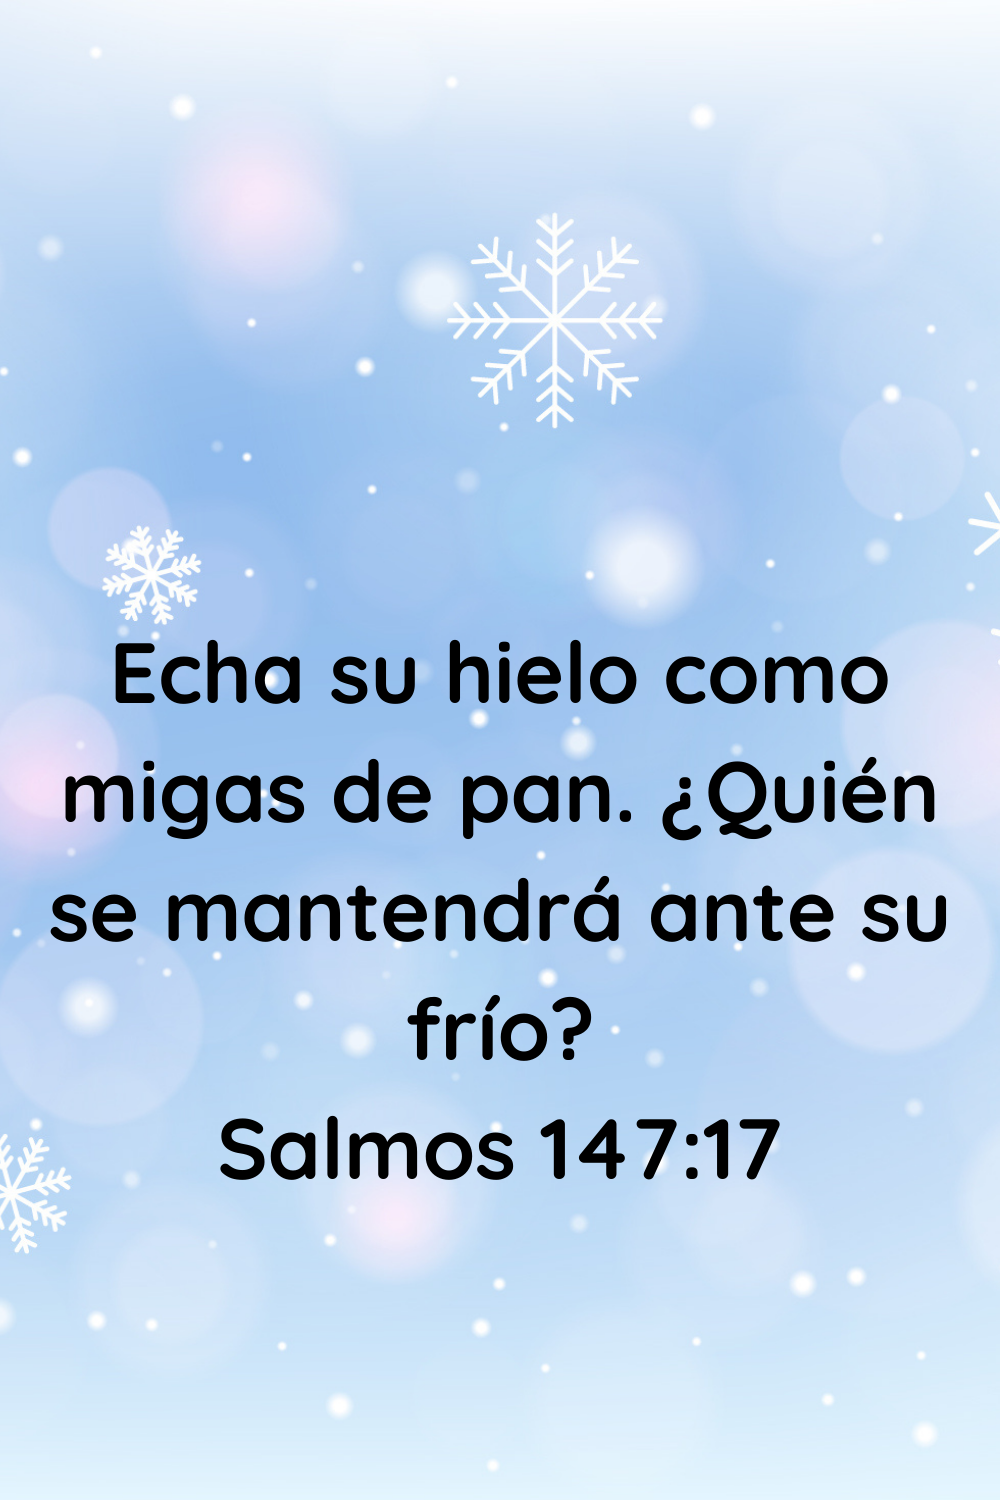 spanish bible text